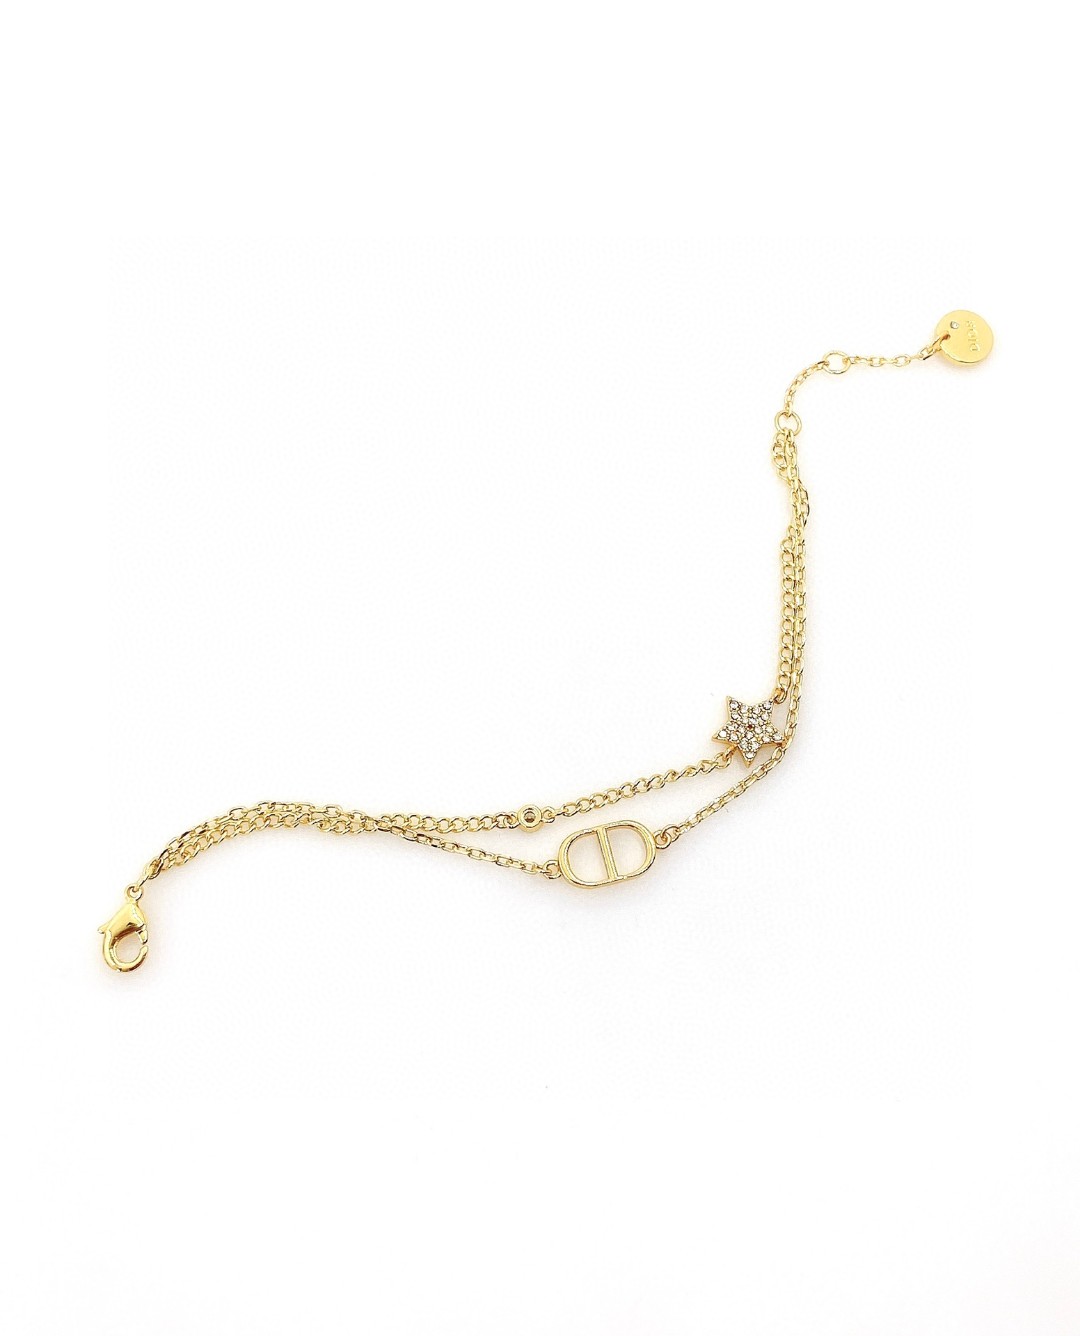 Dior Jewelry Bracelet Gold White Fashion